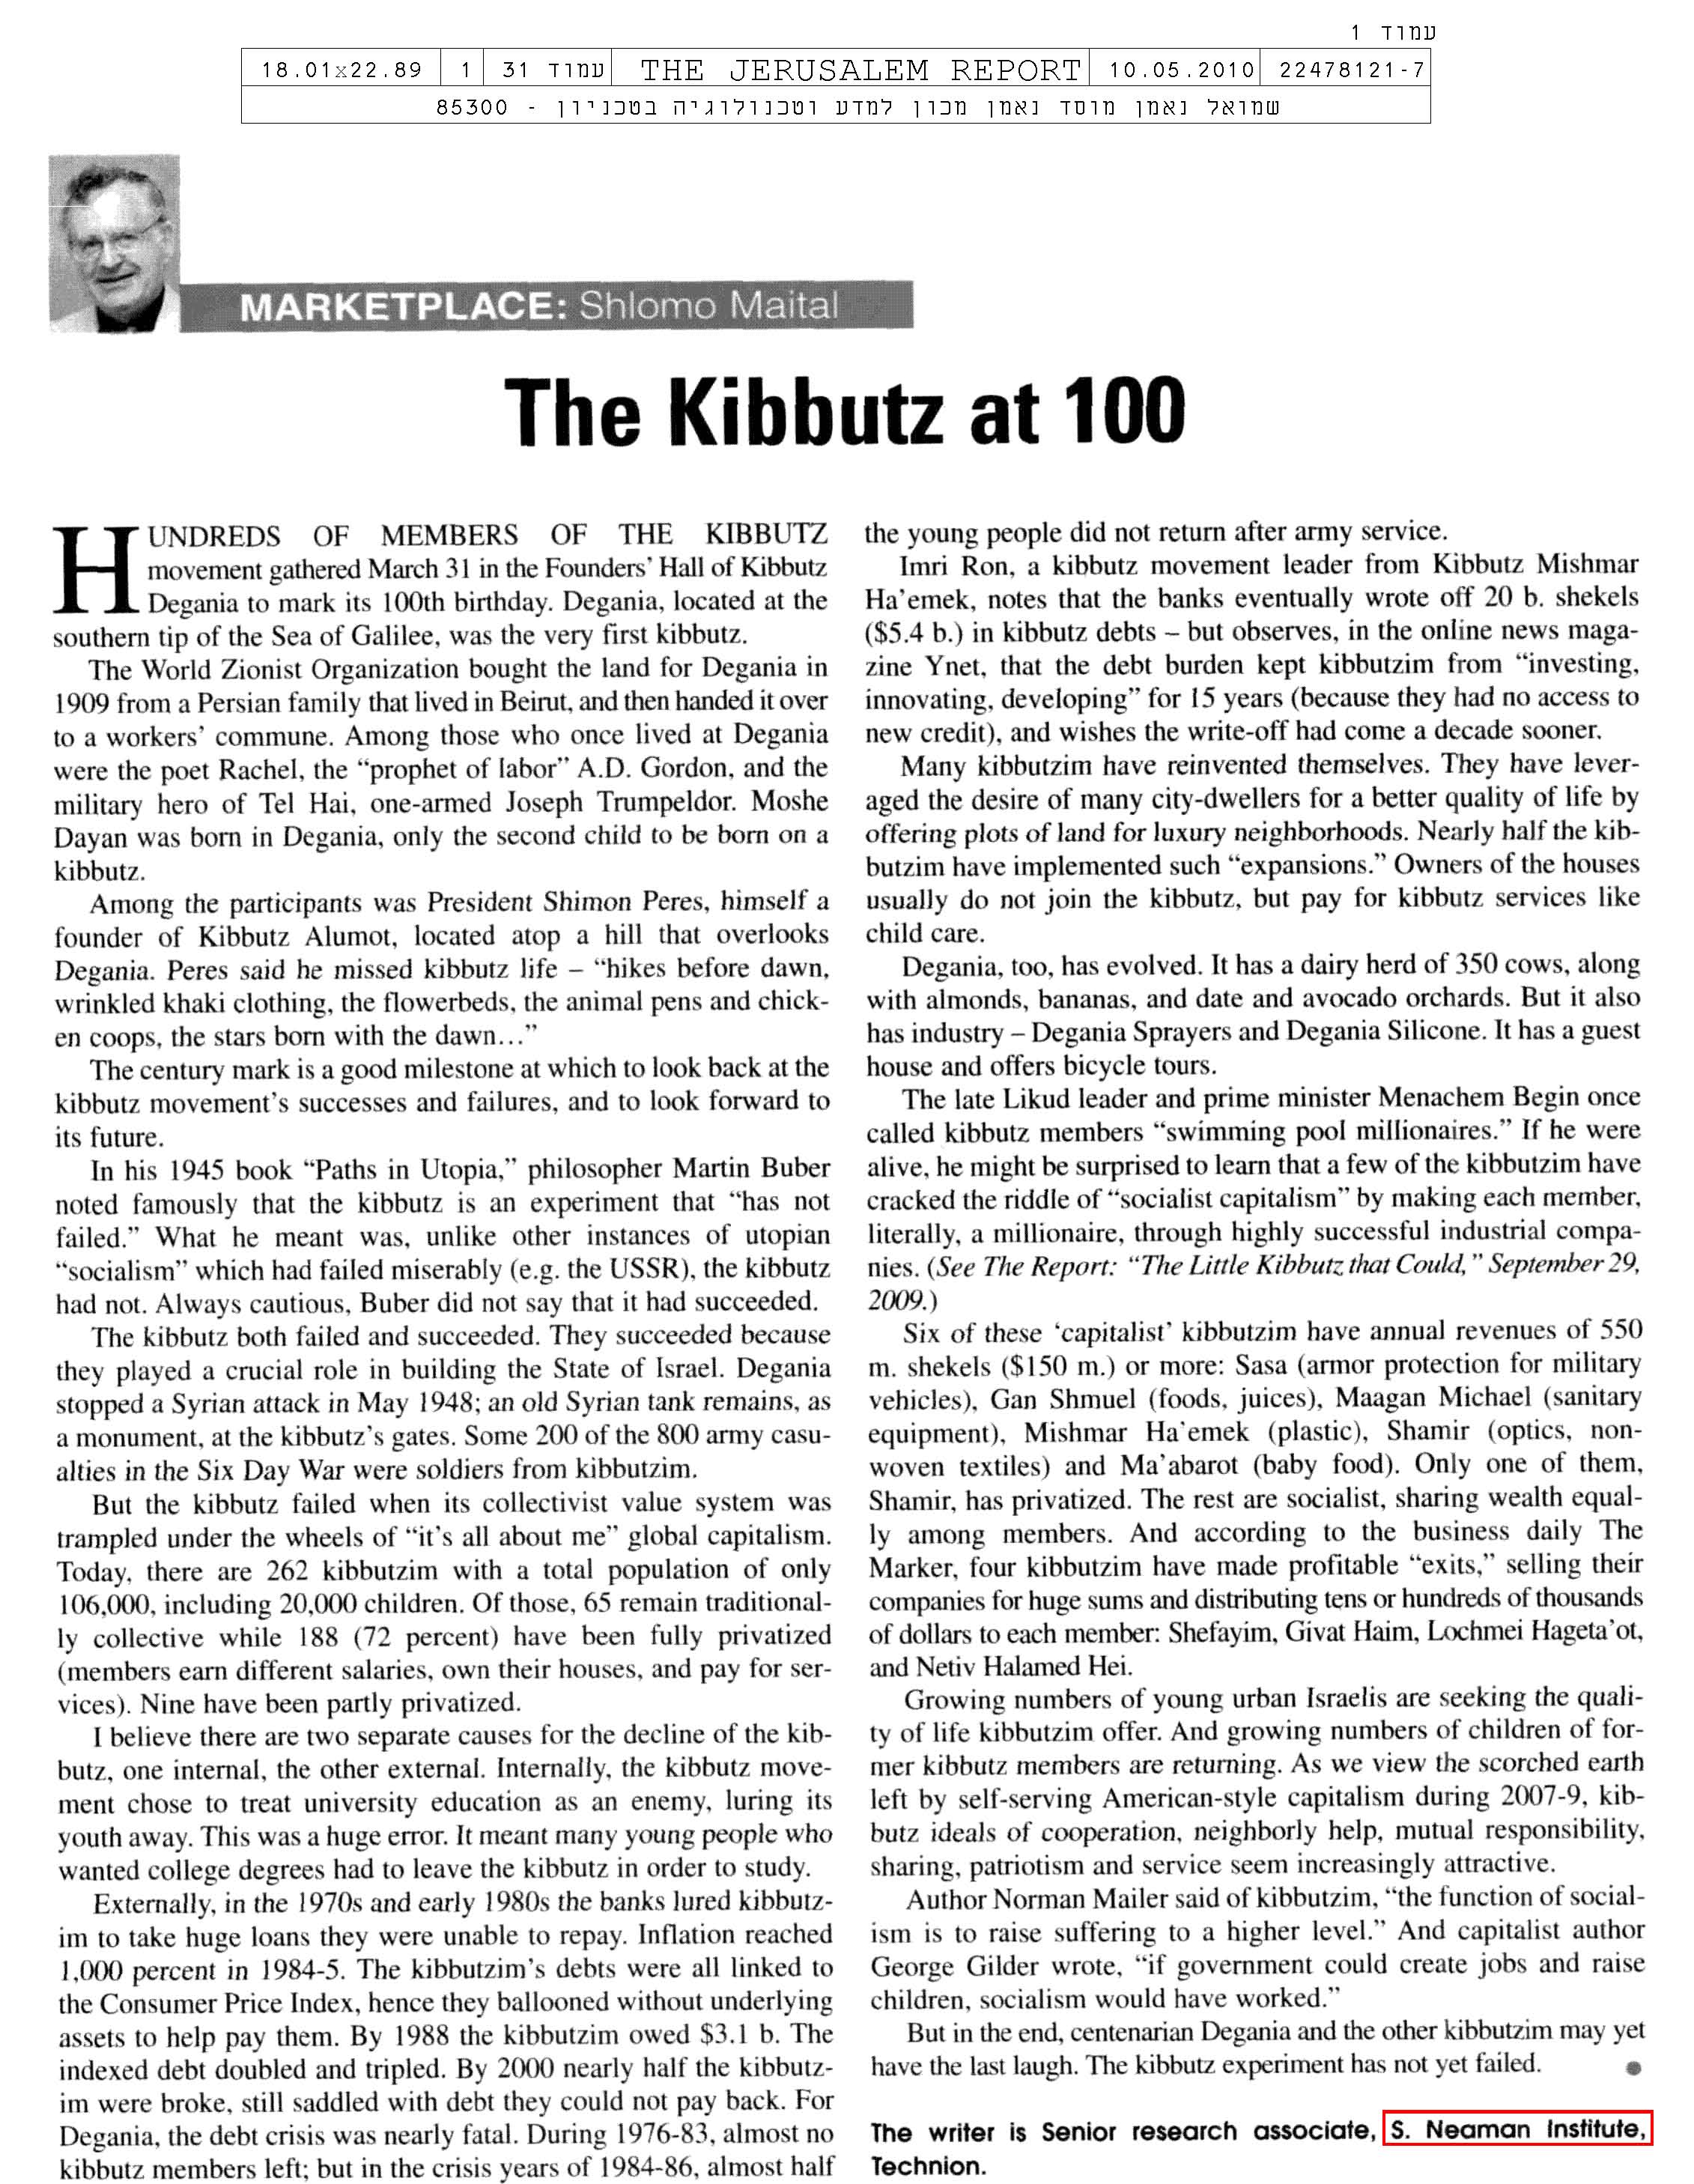 The Kibbutz at 100